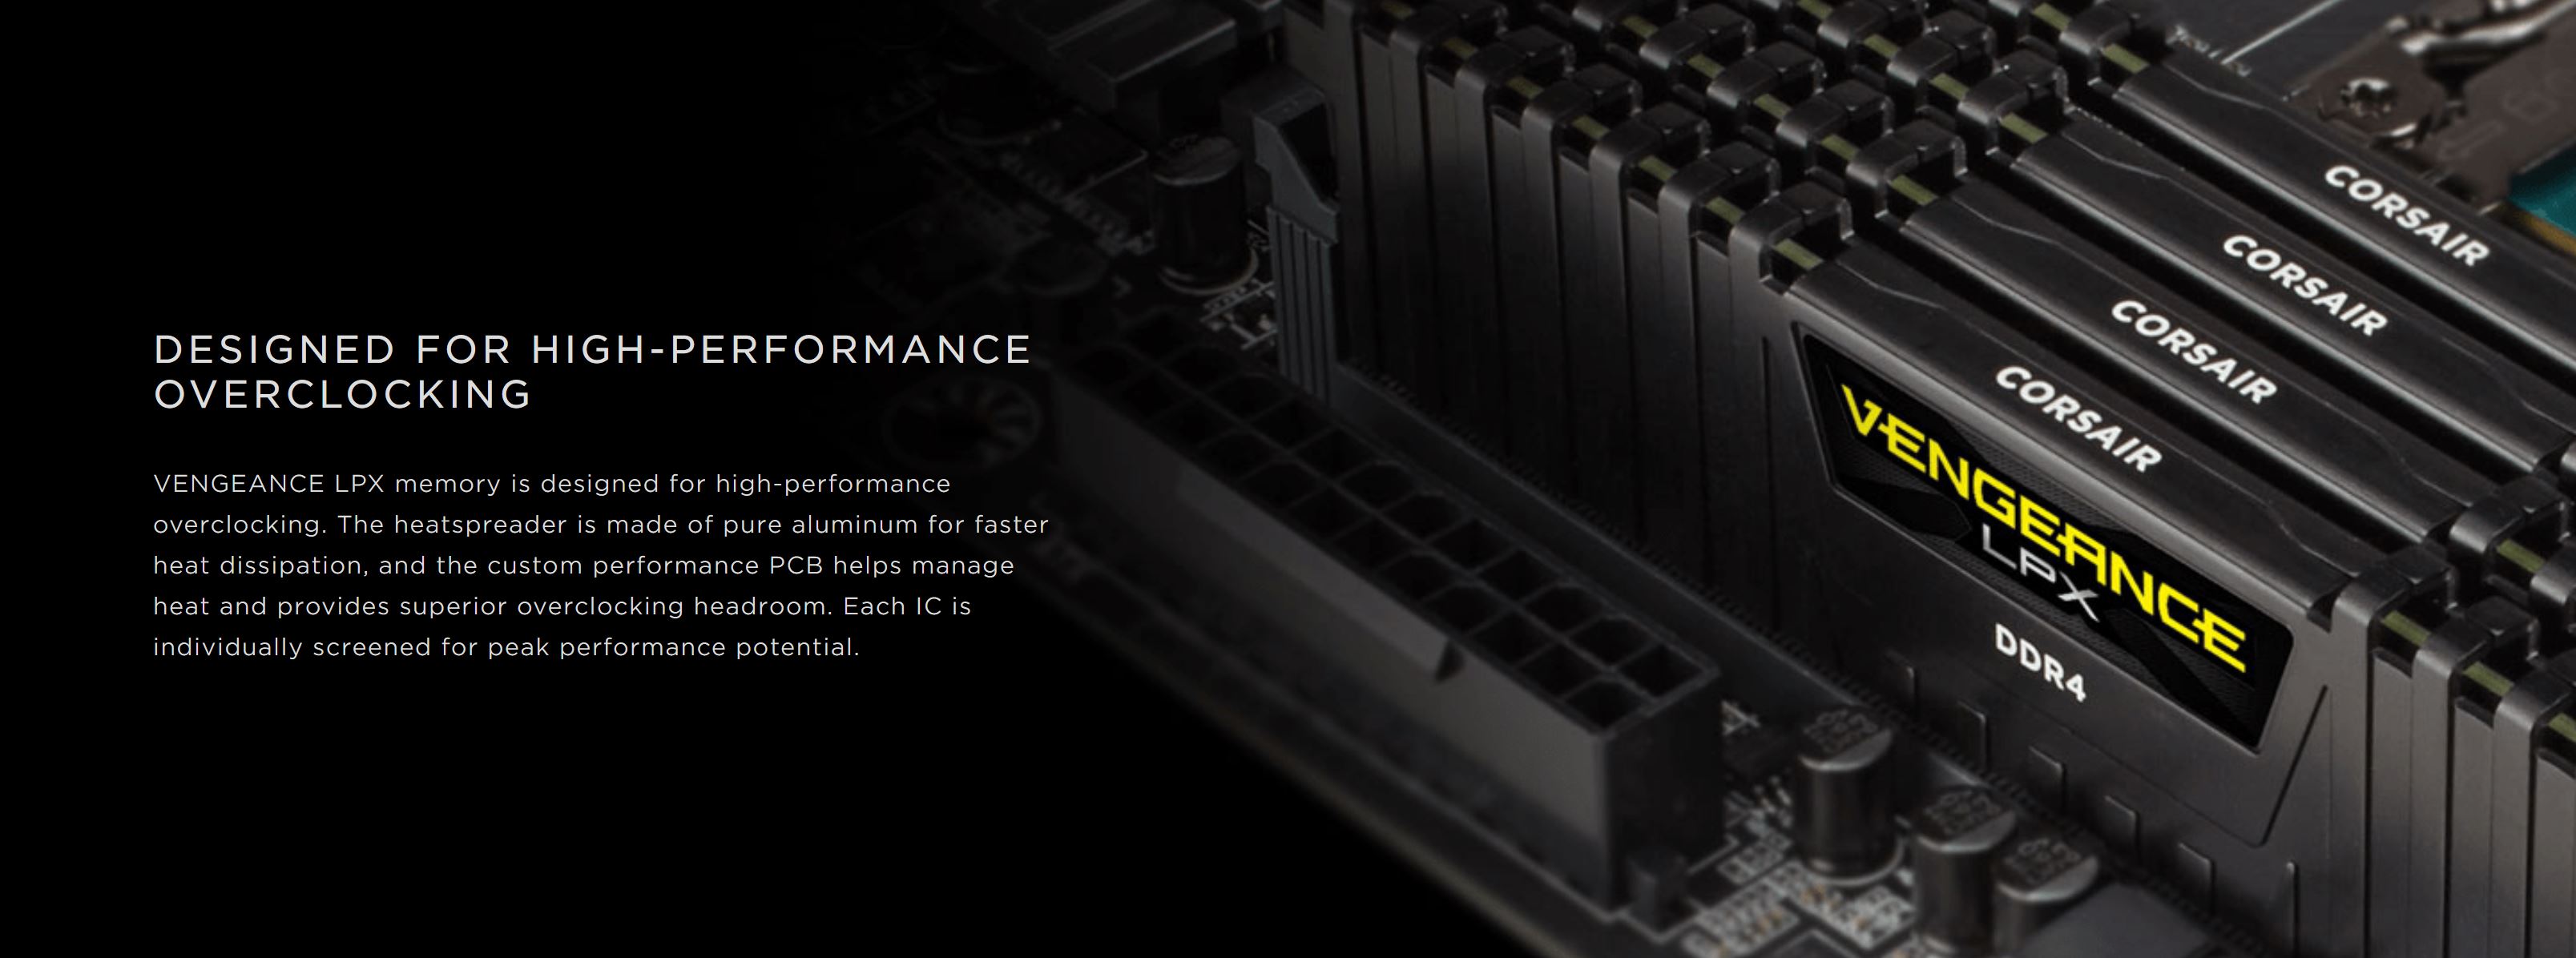 Corsair Vengeance LPX 16GB (2x8GB) 3200MHz DDR4 RAM - Black (CMK16GX4M2Z3200C16)